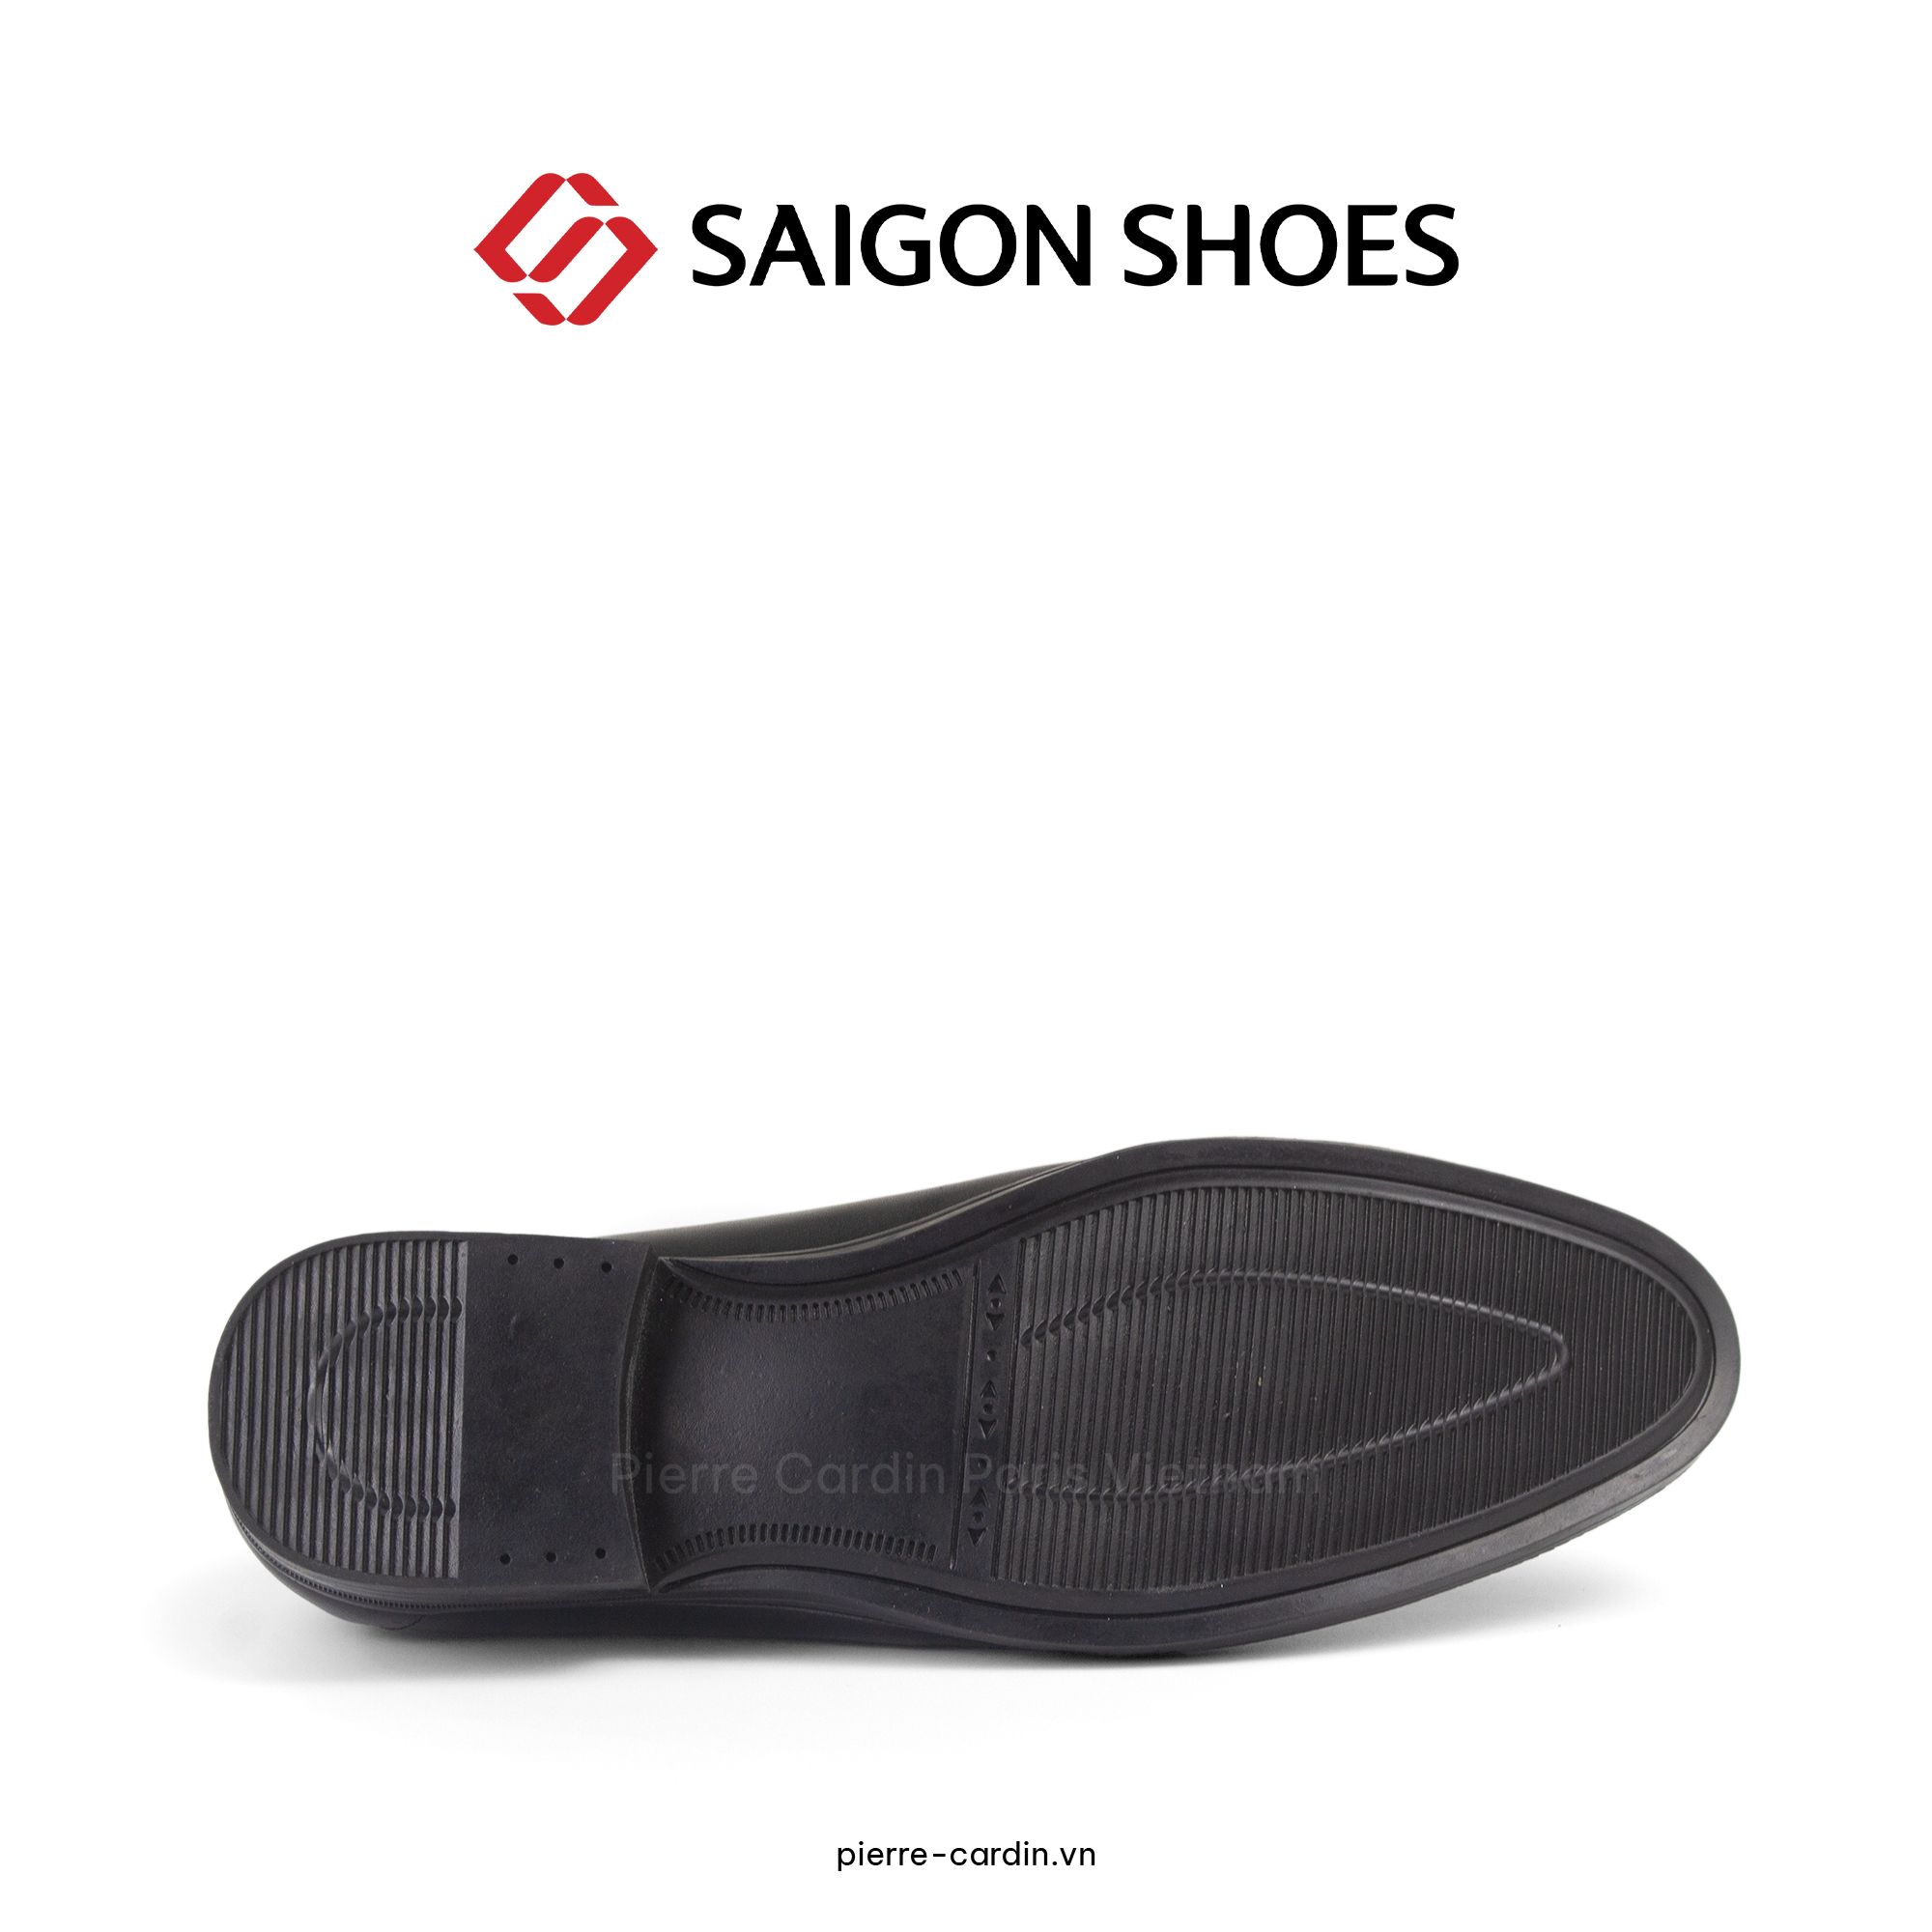 Pierre Cardin Paris Vietnam: Giày Lười Khóa Horsebit Saigon Shoes - SGMFWLH 010